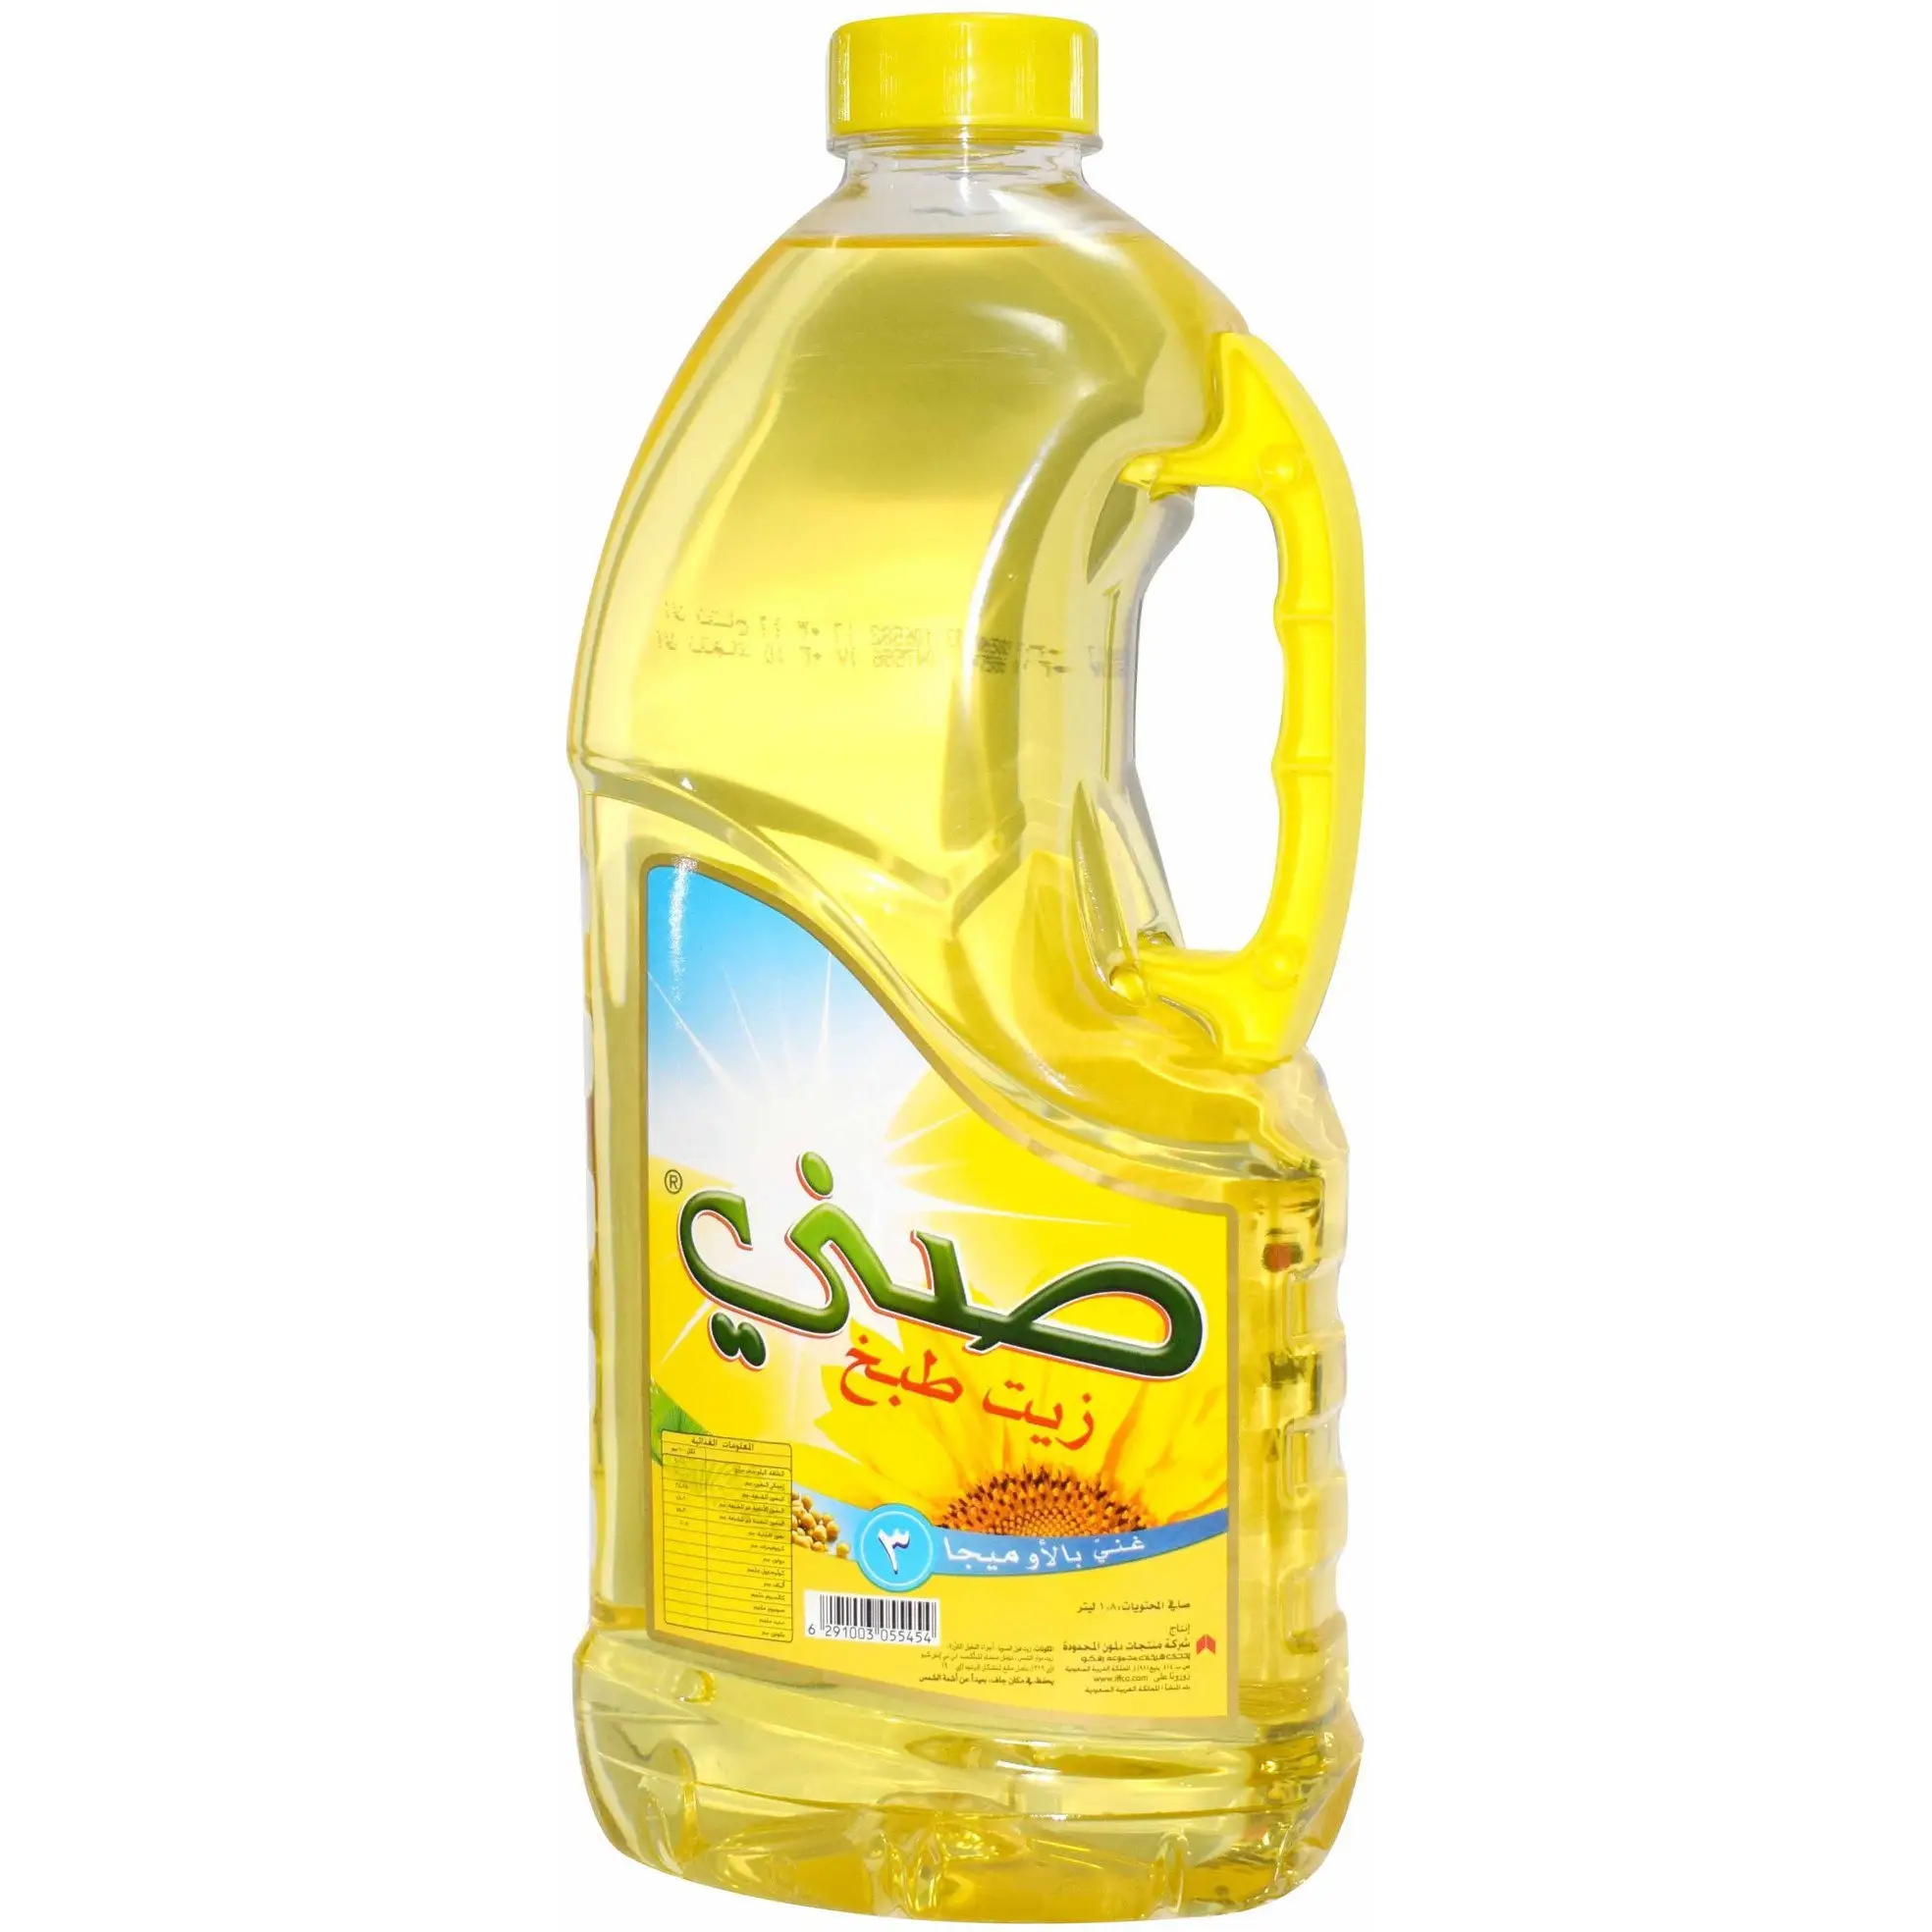 Organic Sunflower Oil For Sale - Nutritive Sunflower Oil - Refined Sunflower Oil bulk suppliers